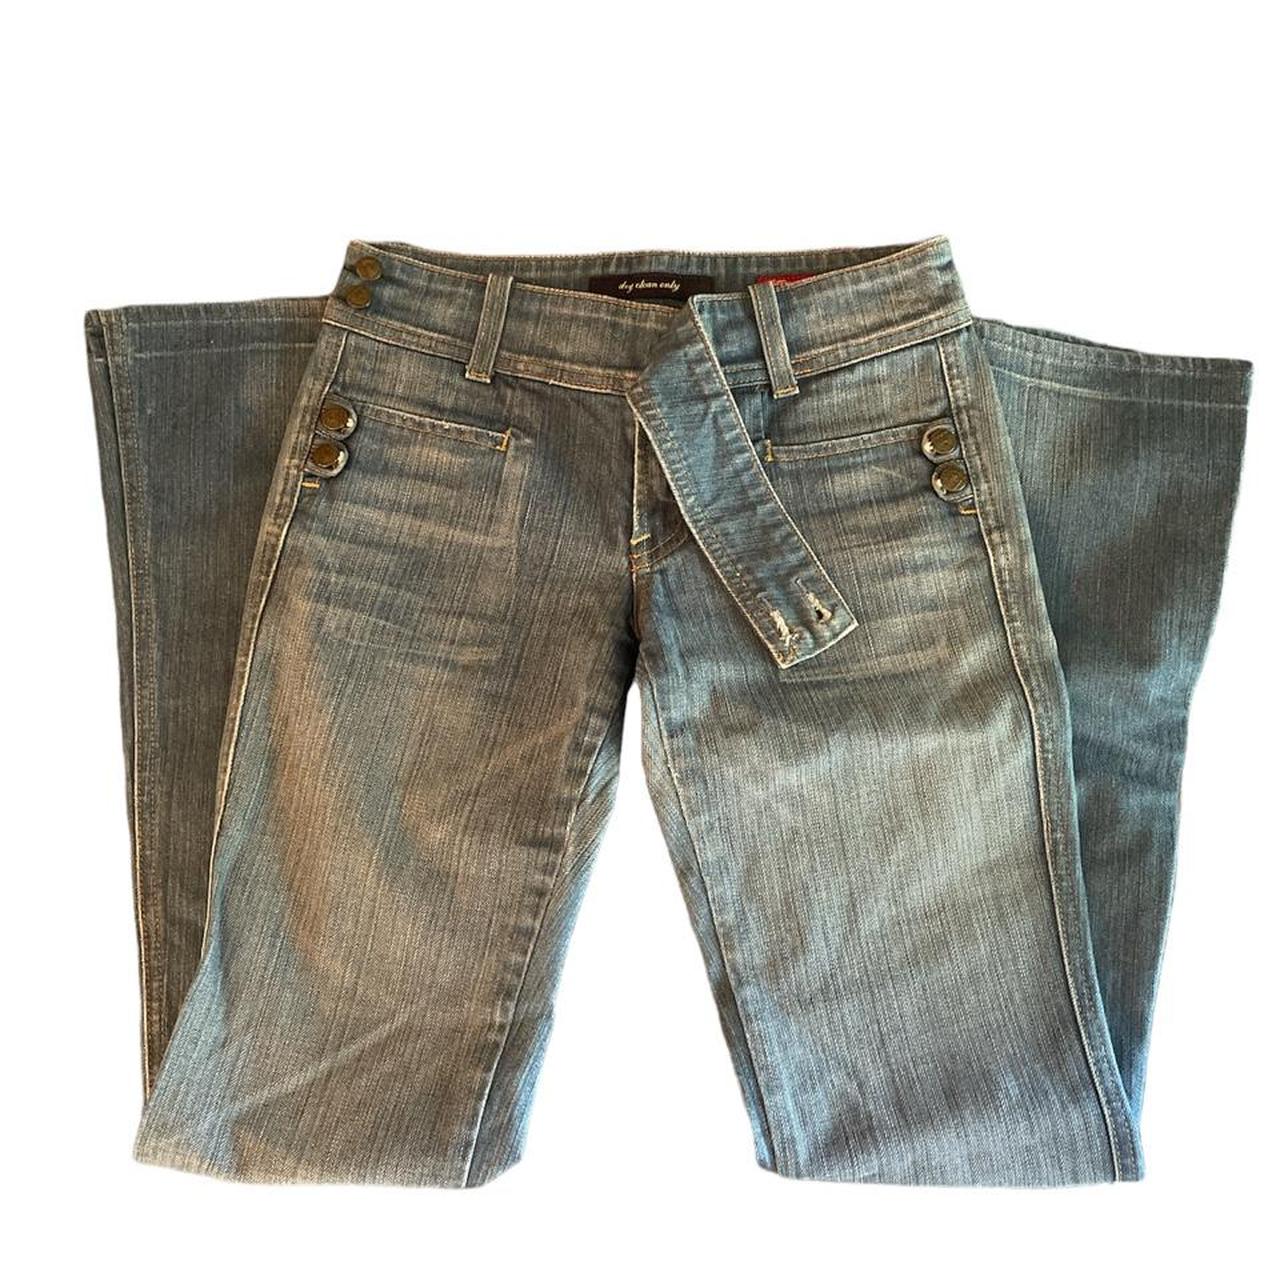 Product Image 1 - Darker light blue jeans, size